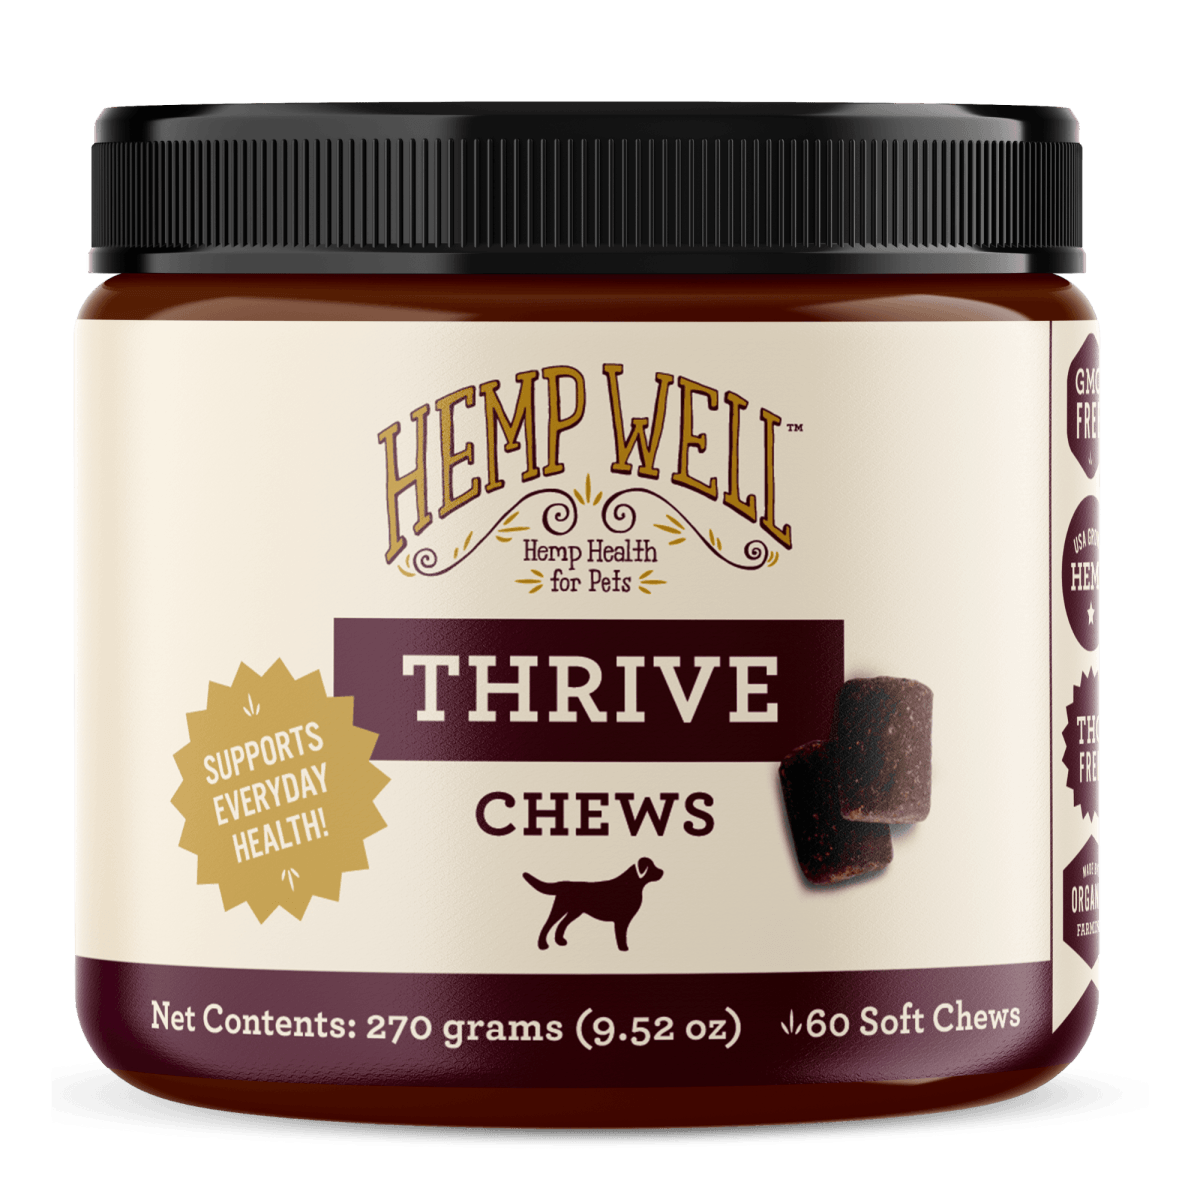 Thrive Dog Soft Chews - Hemp Well